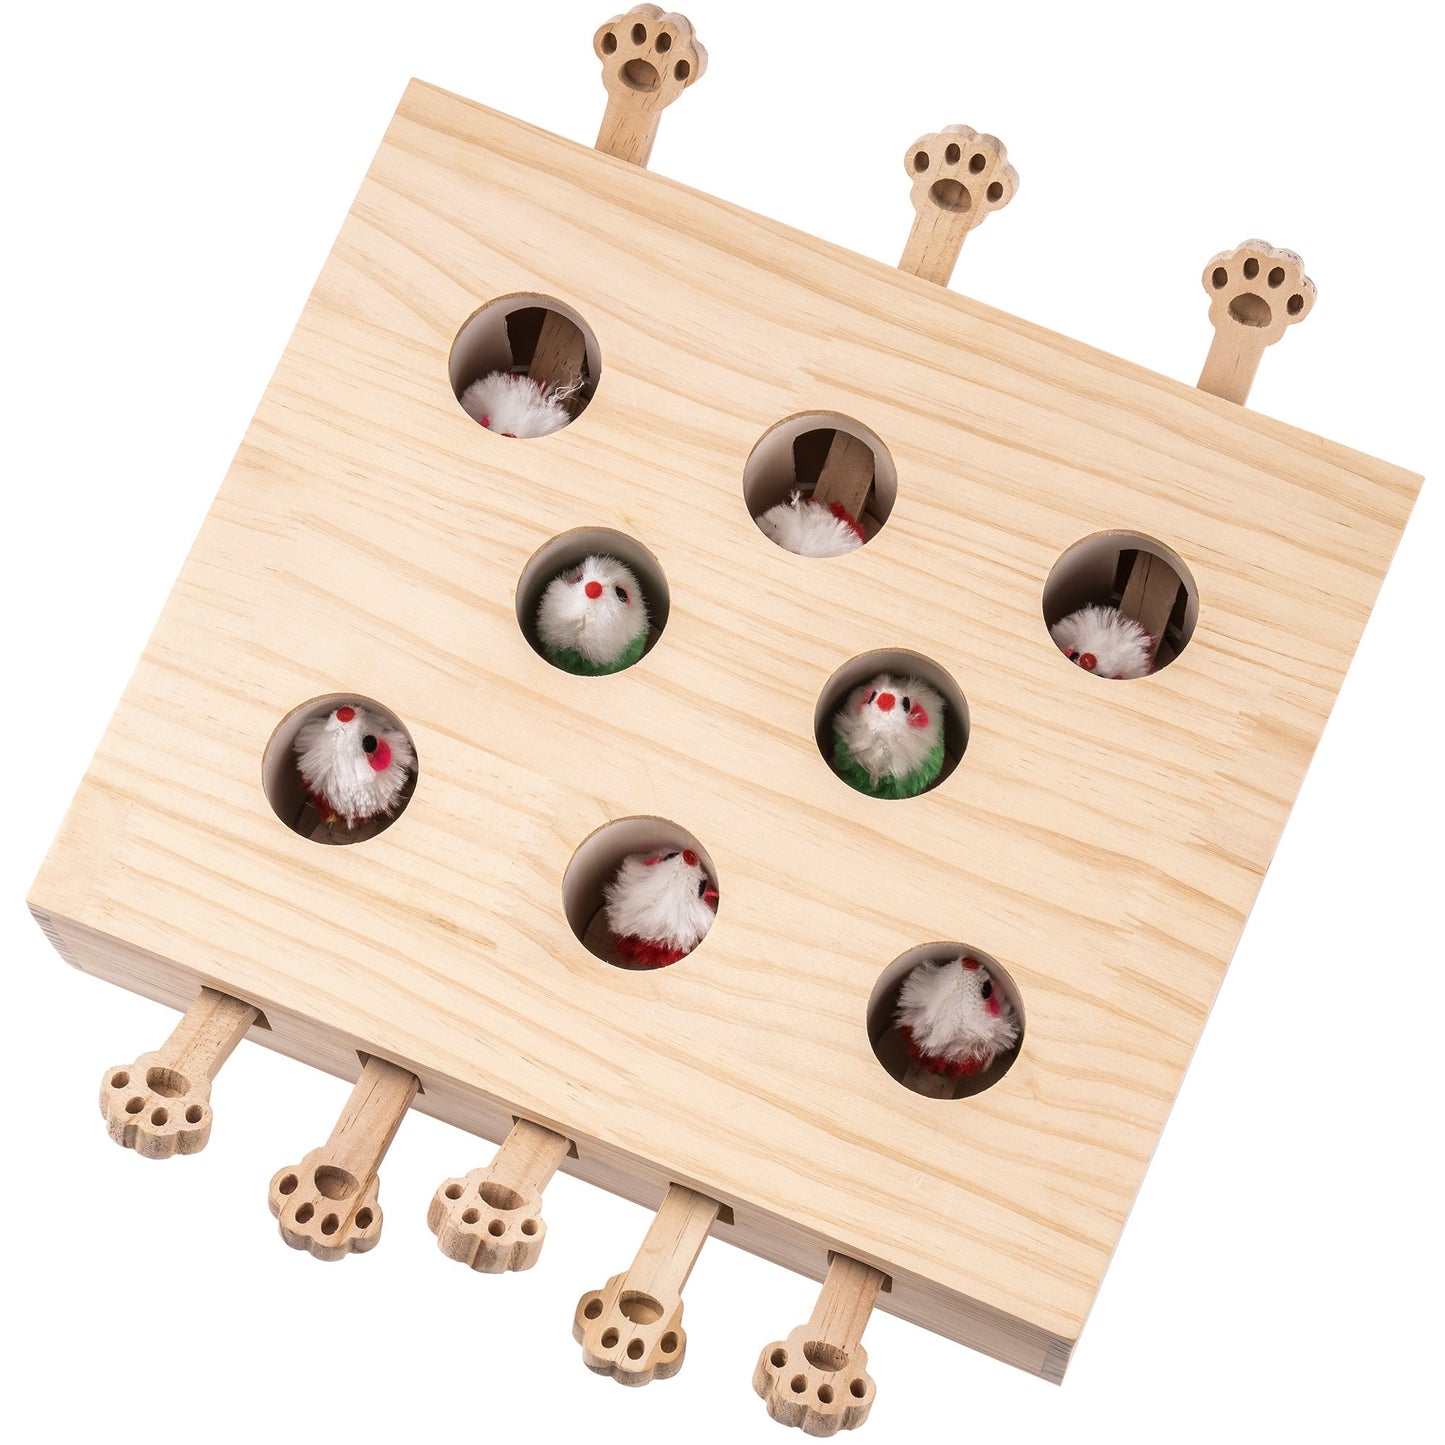 8 Holes Whack-A-Mole Wooden Platform Toy